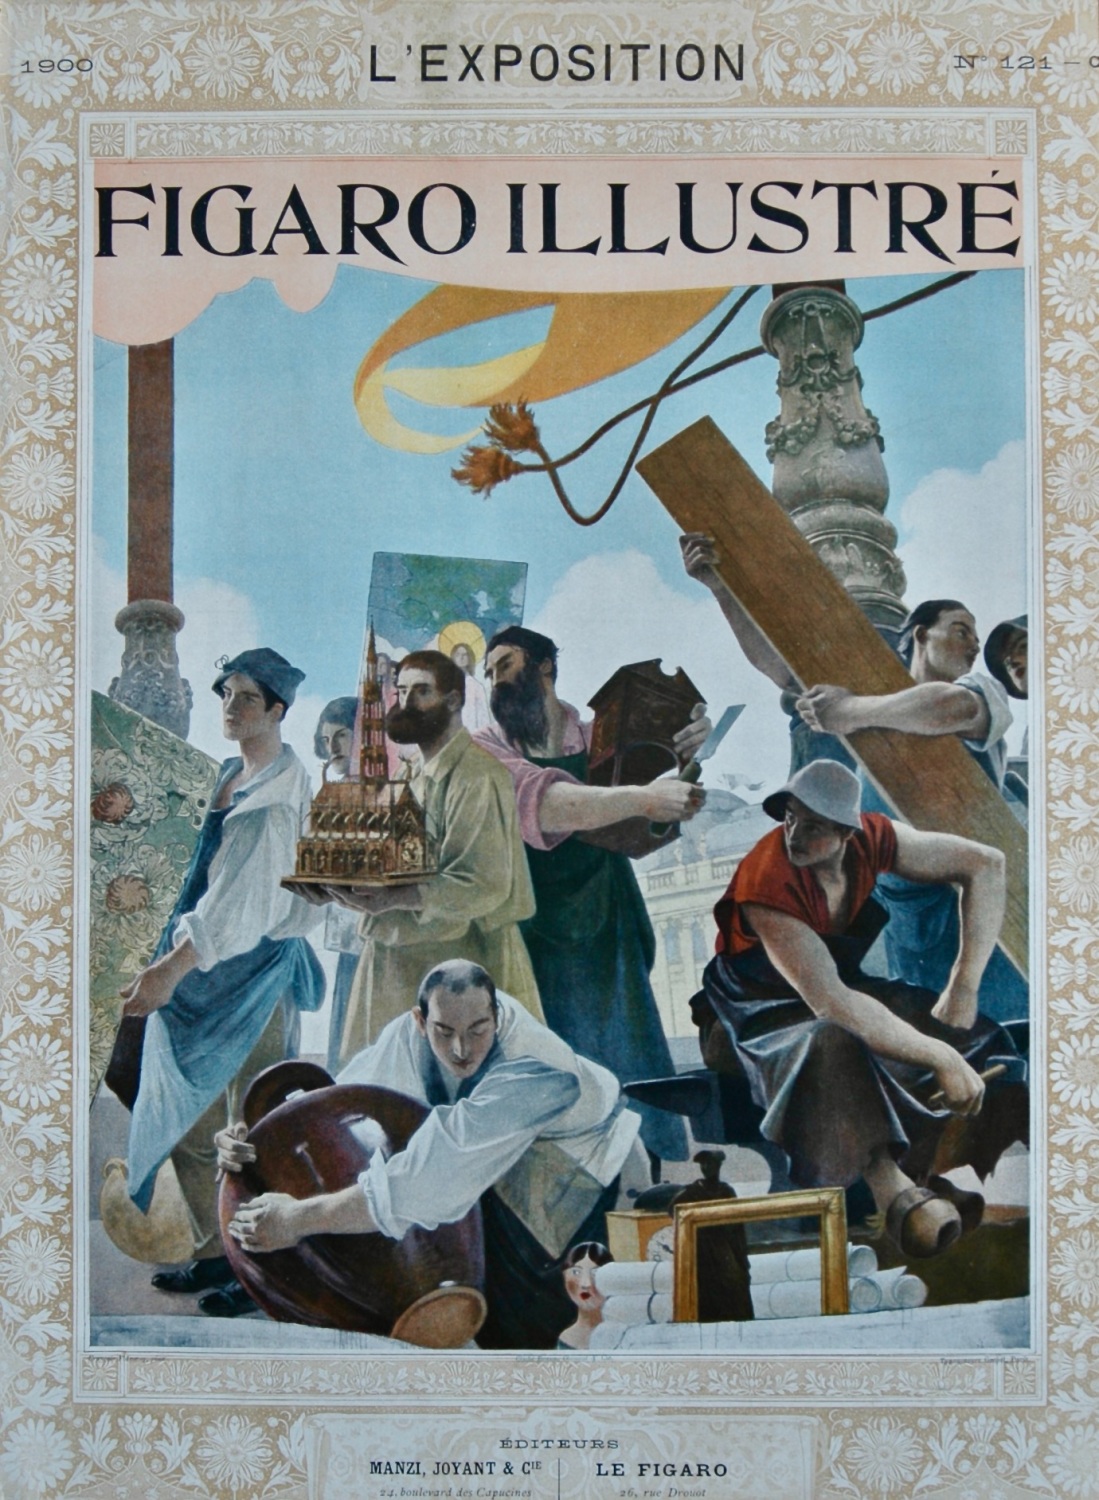 Figaro Illustre - L'Exposition, N0. 121, April 1900.  (Colouue Cover Pictur